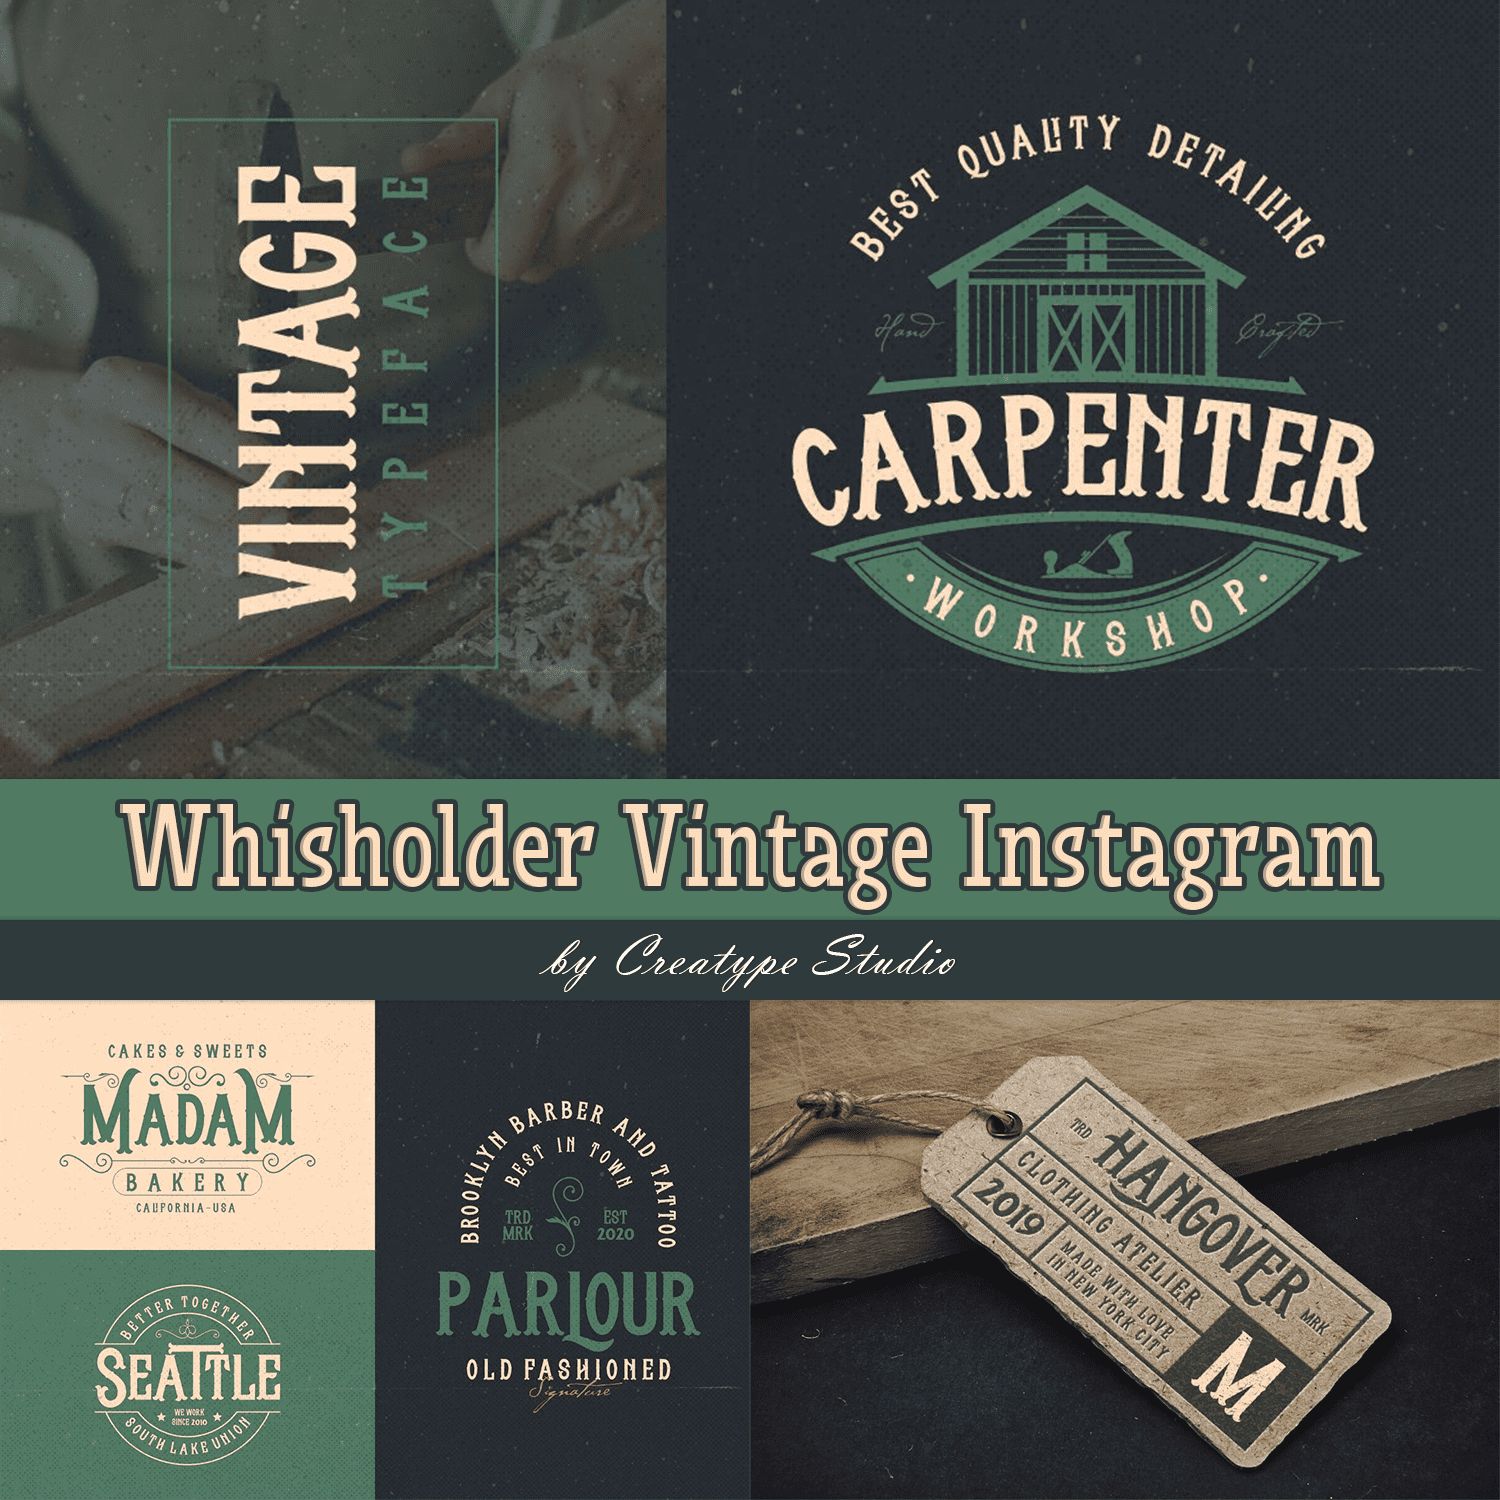 Whisholder Vintage Instagram cover.